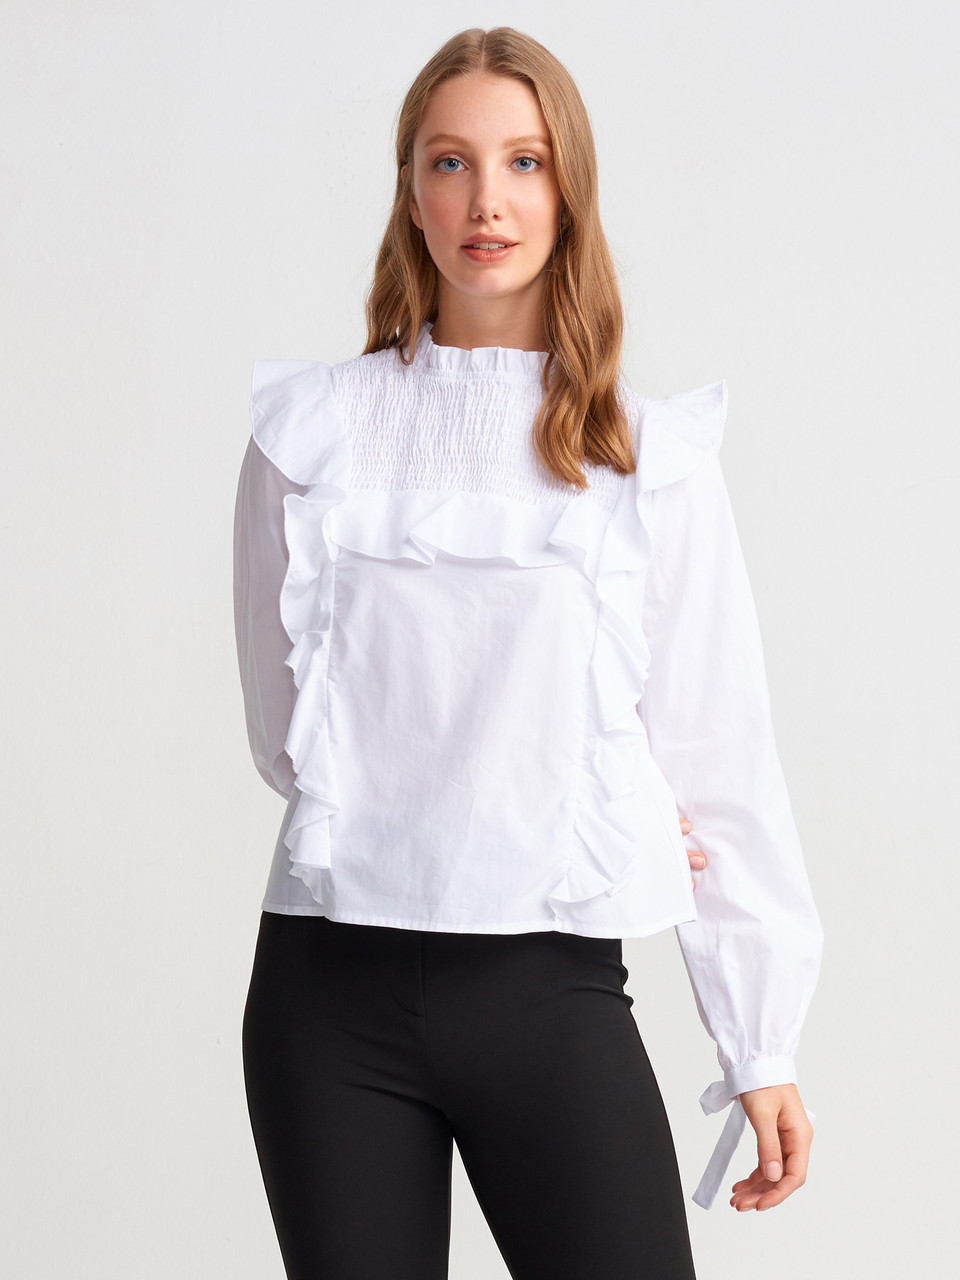 

Оригинальная блузка Dilvin. Белый цвет 46